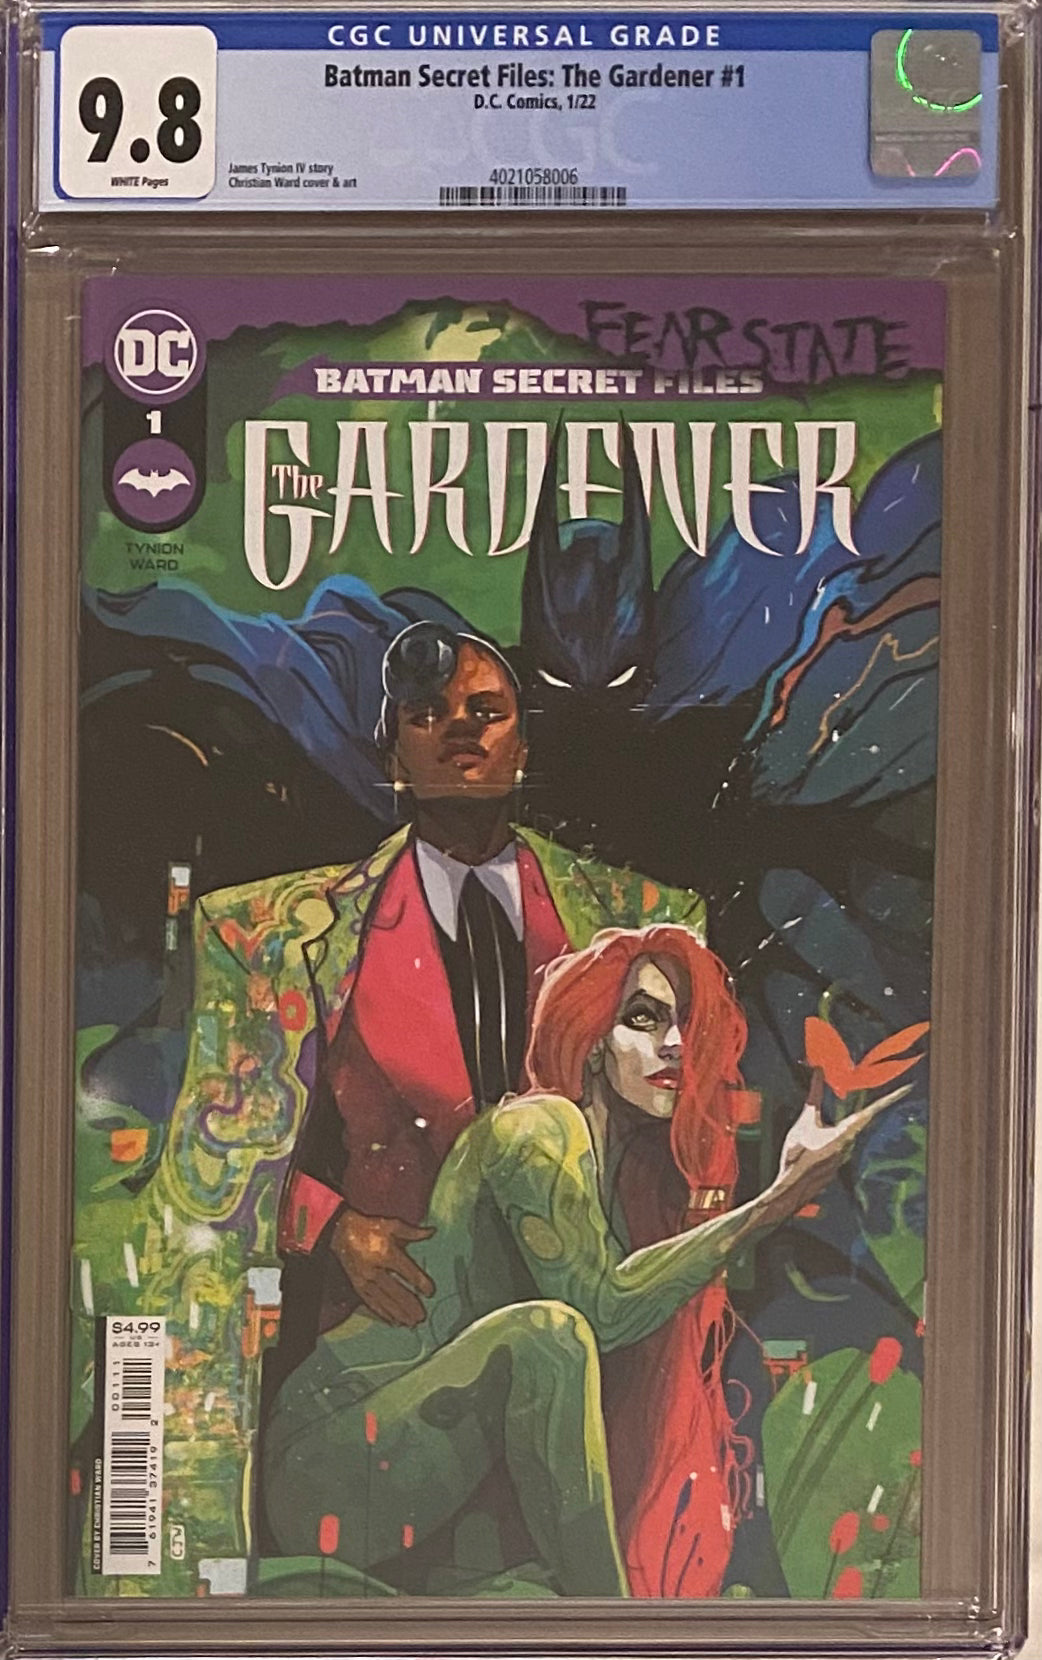 Batman Secret Files: The Gardener #1 CGC 9.8